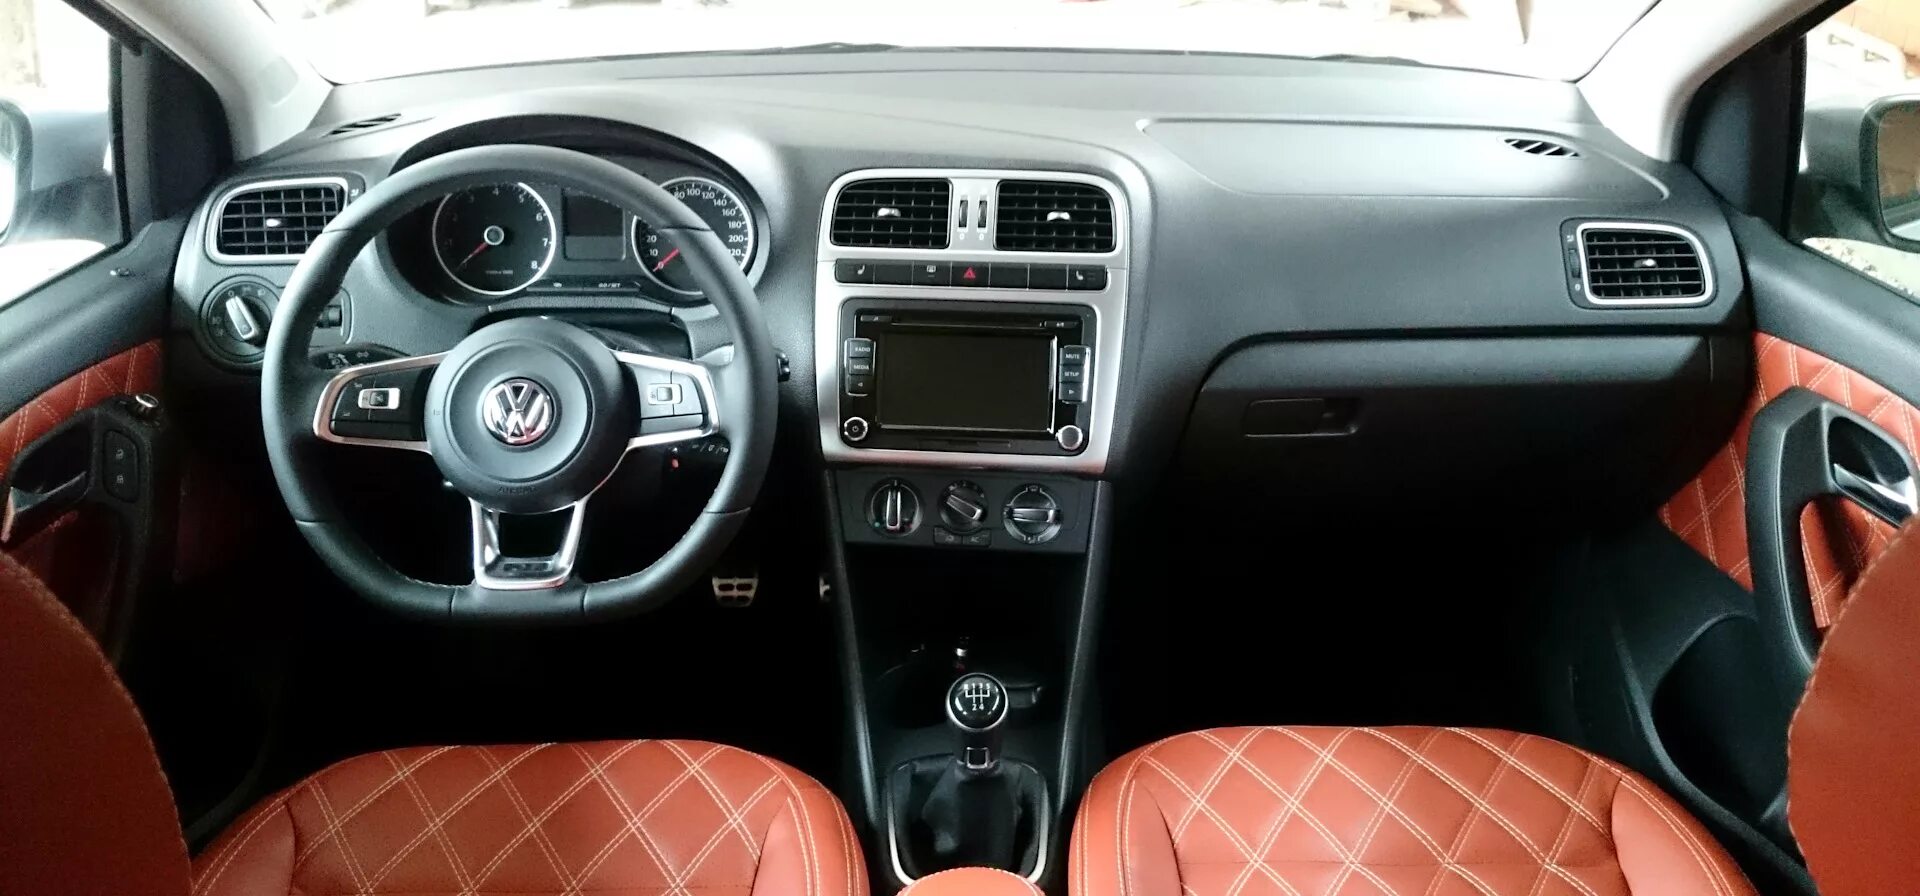 Vw polo управление. Фольксваген поло кондиционер панель. VW Polo sedan 2018. Фольксваген поло 2018 панель управления. Рамка переходная VW Polo sedan 2015.